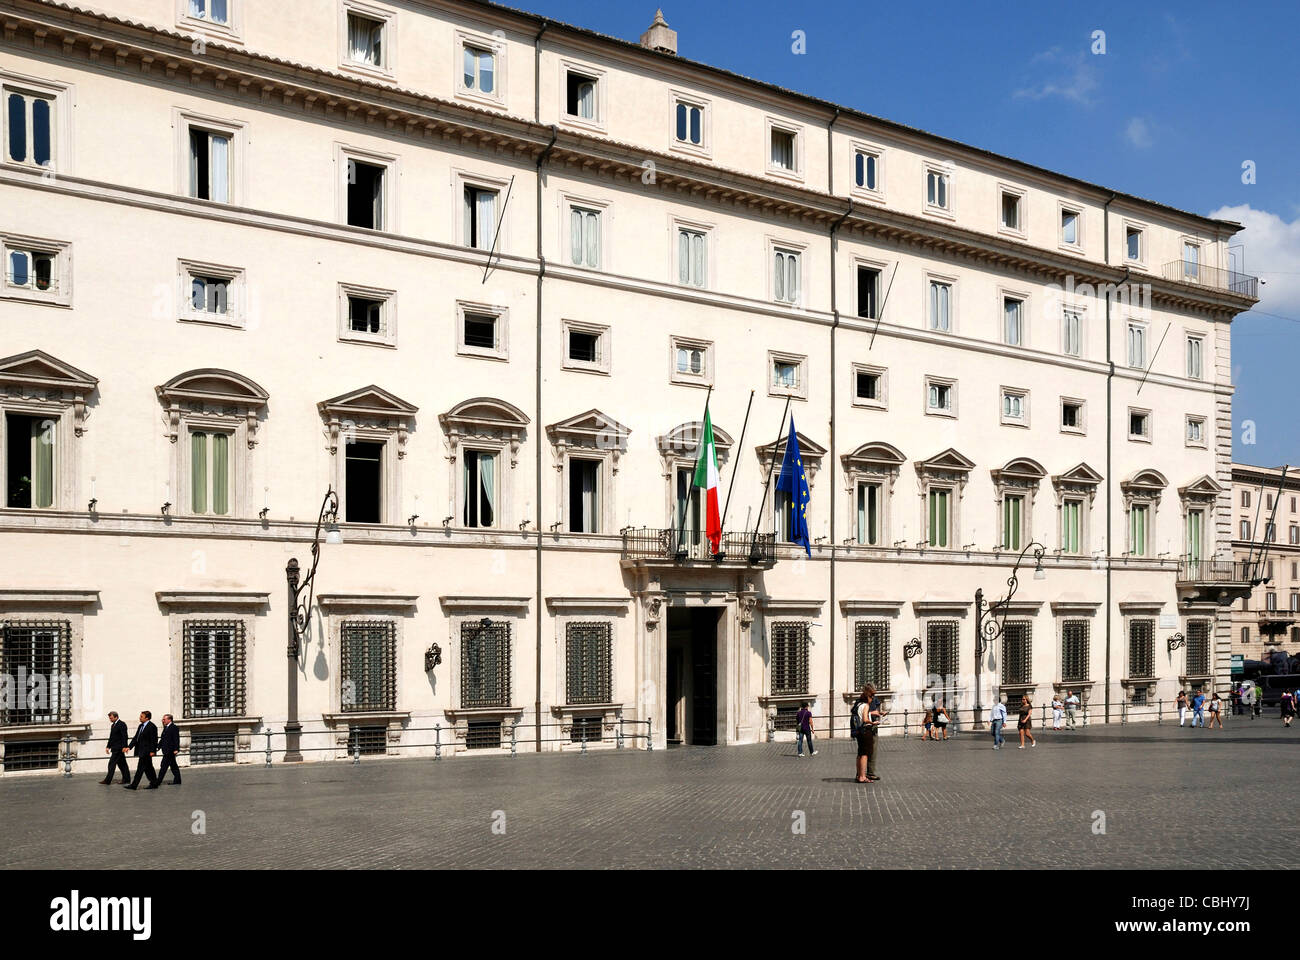 Palazzo Chigi in Rome - Residence of the Italian Prime Minister. Stock Photo